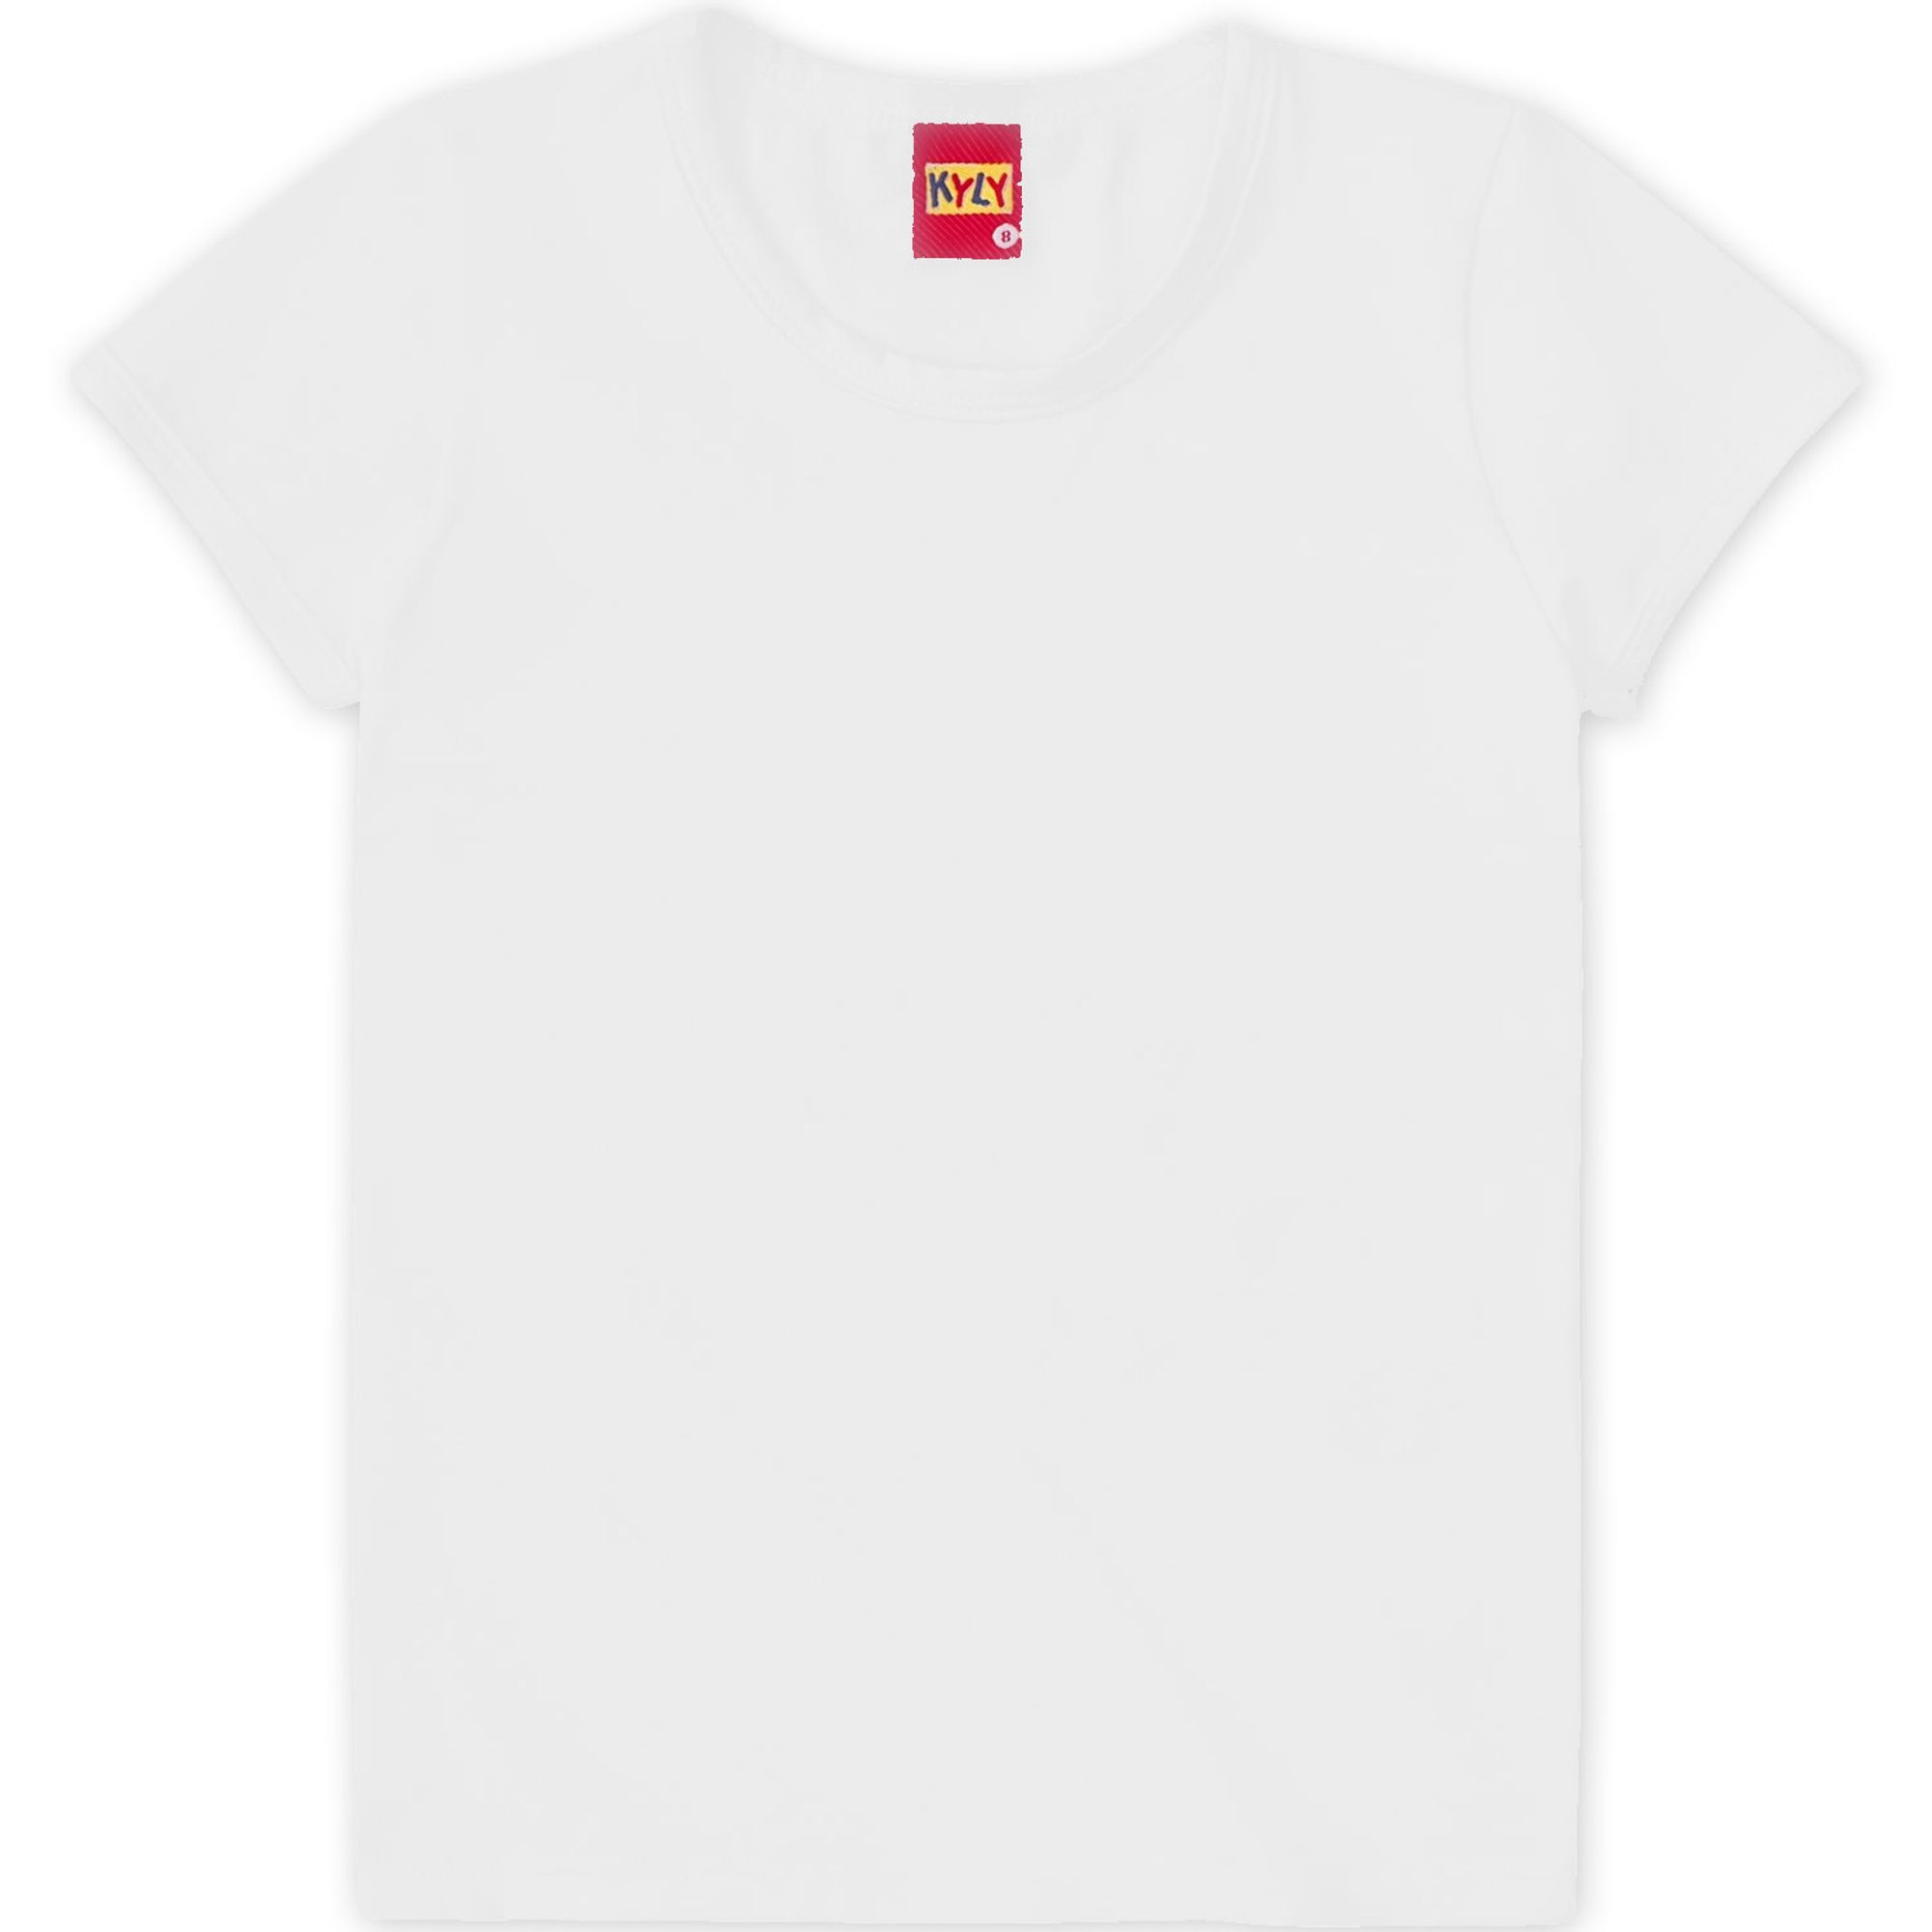 camiseta-basica-infantil-branca-meninas-malha-algodao-1